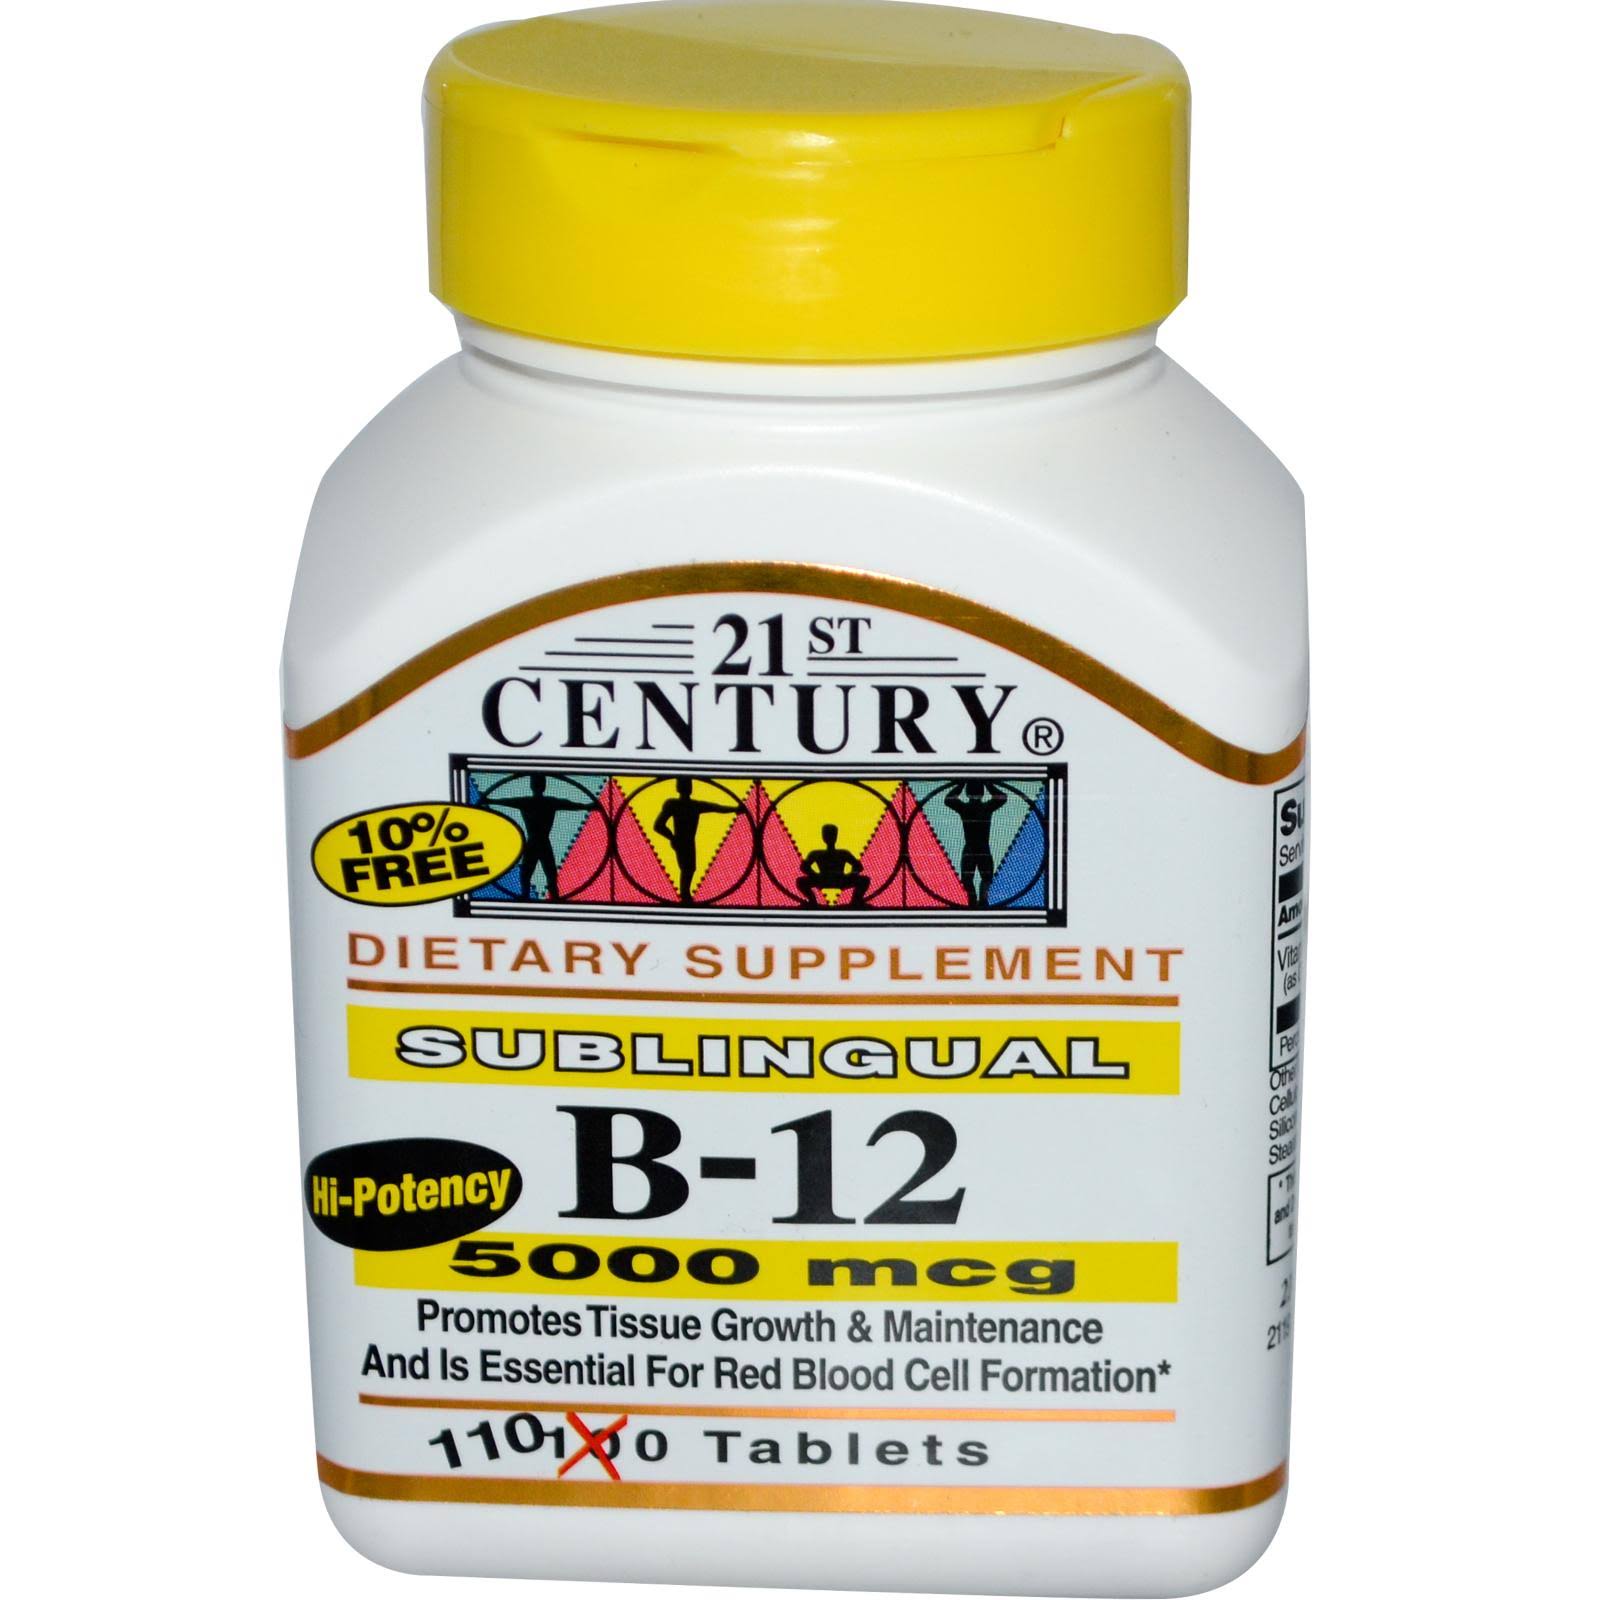 21st Century Sublingual Vitamin B-12 - 5000mcg, 110 Tablets